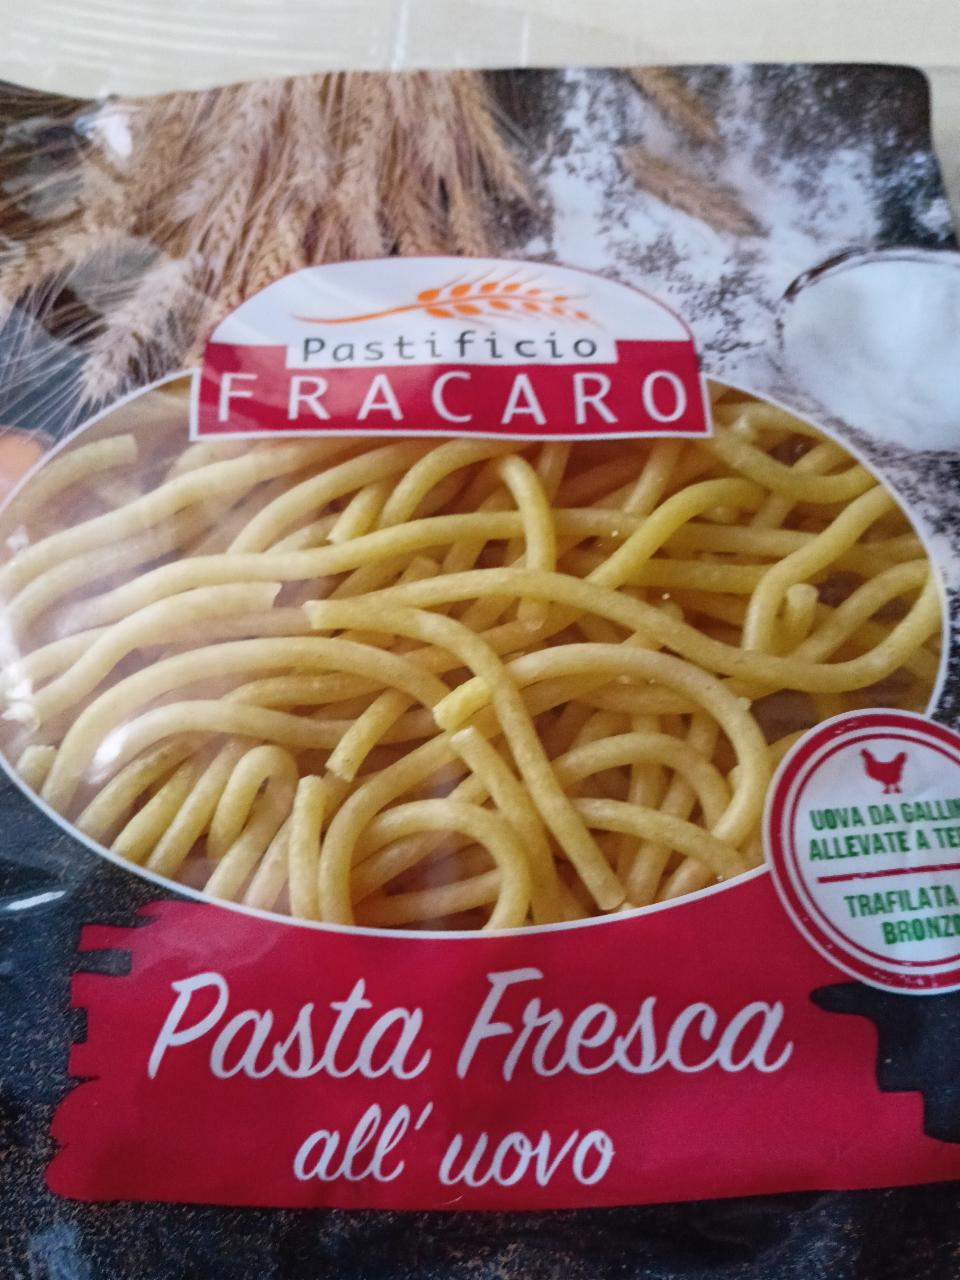 Fotografie - Pastificio fracaro pasta fresca